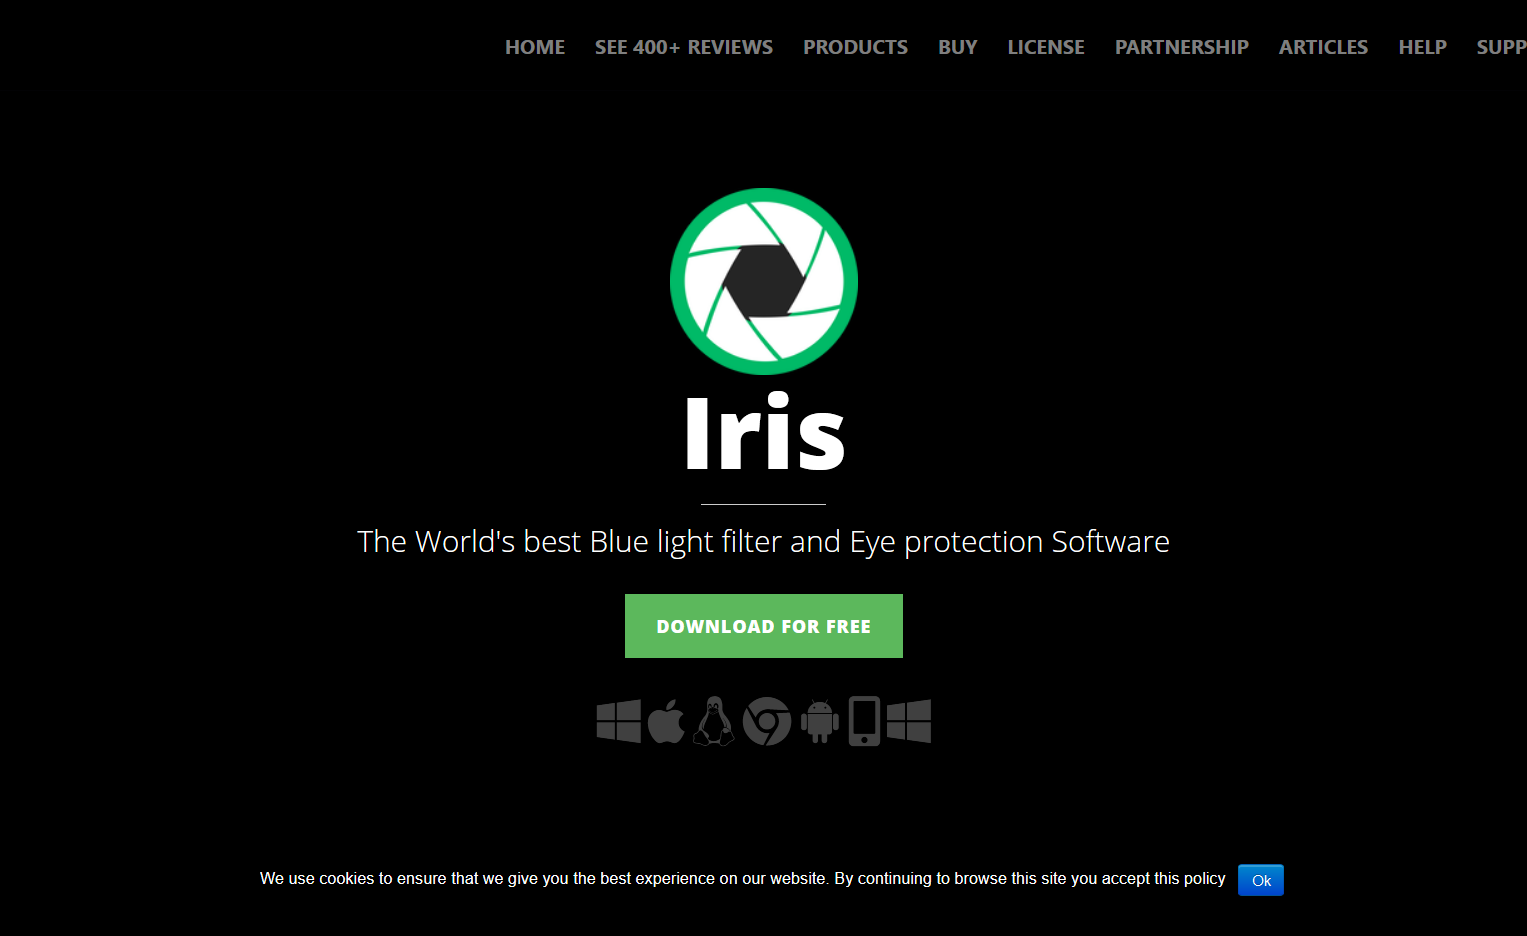 Find detailed information about Iris